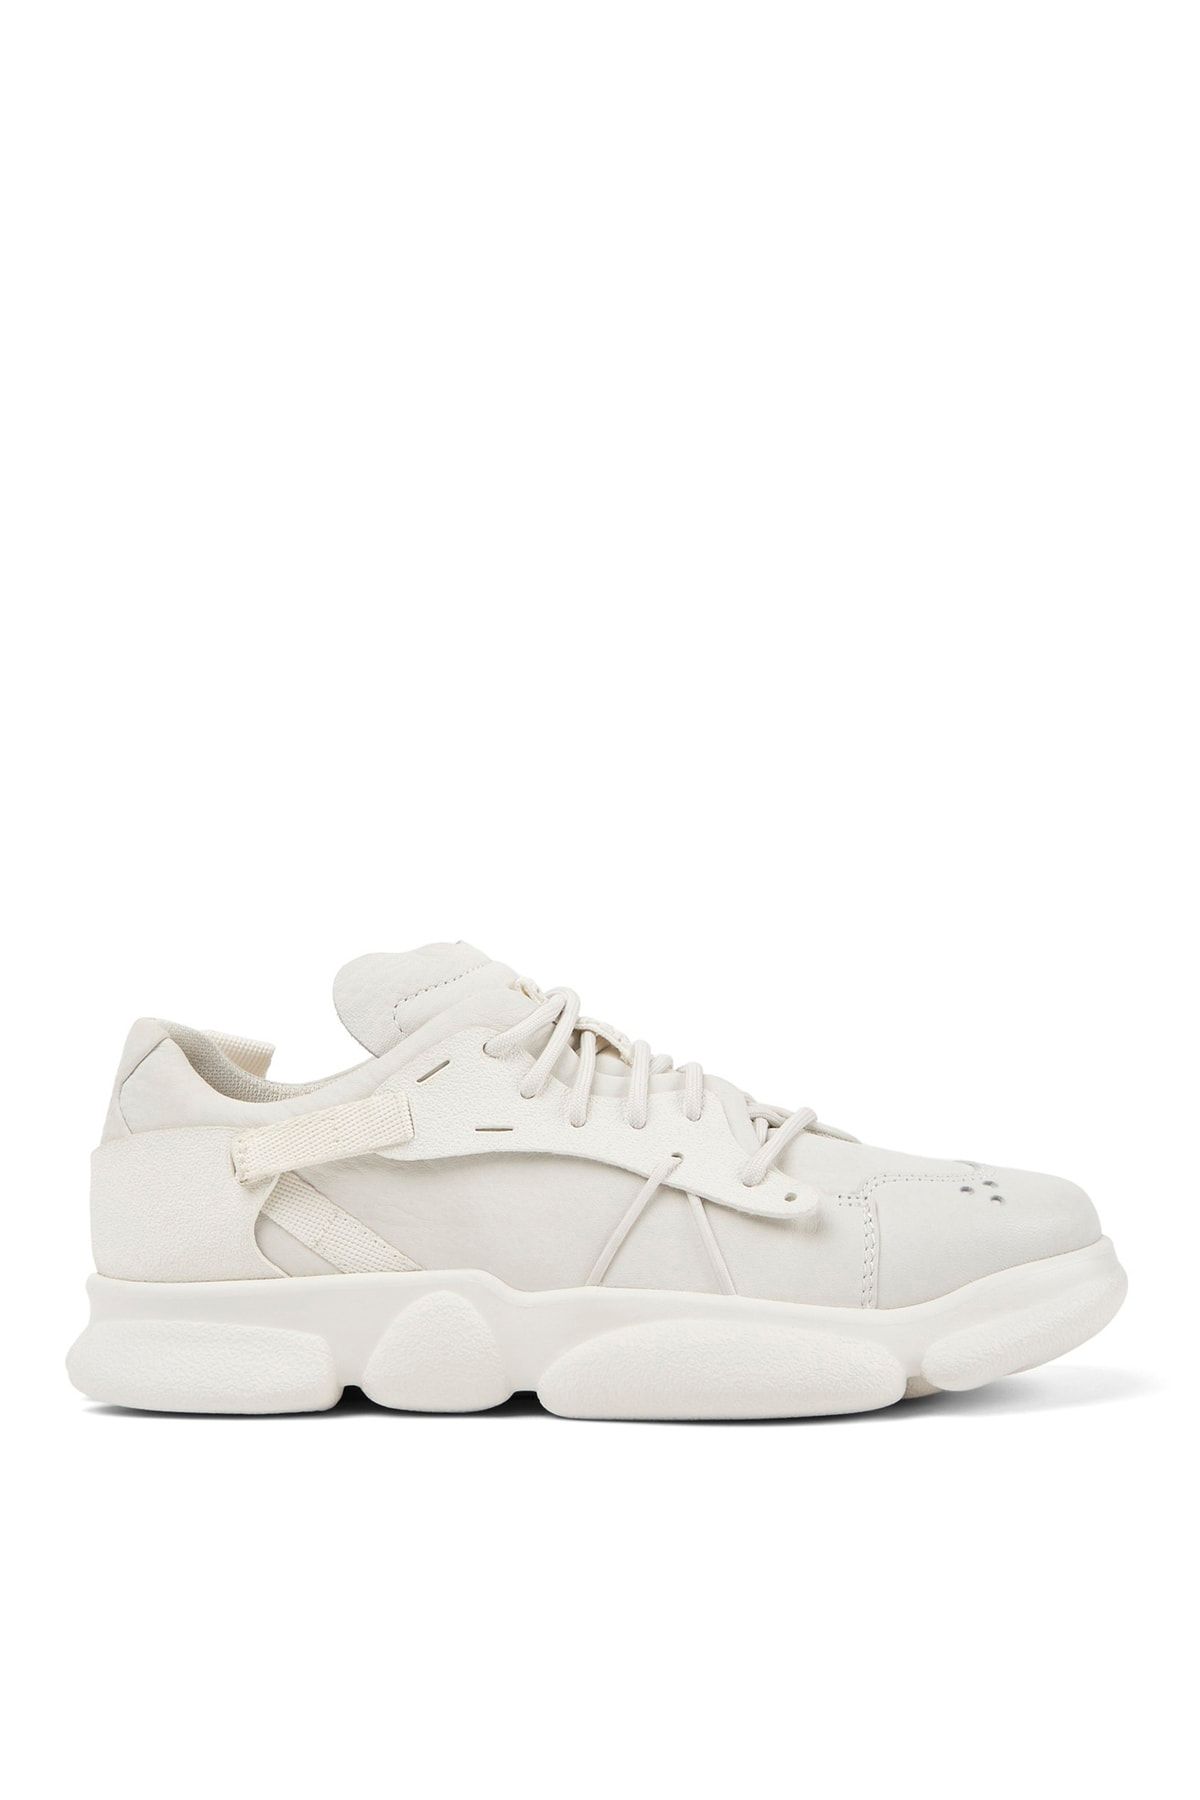 CAMPER Beyaz Kadın Sneaker K201439-001